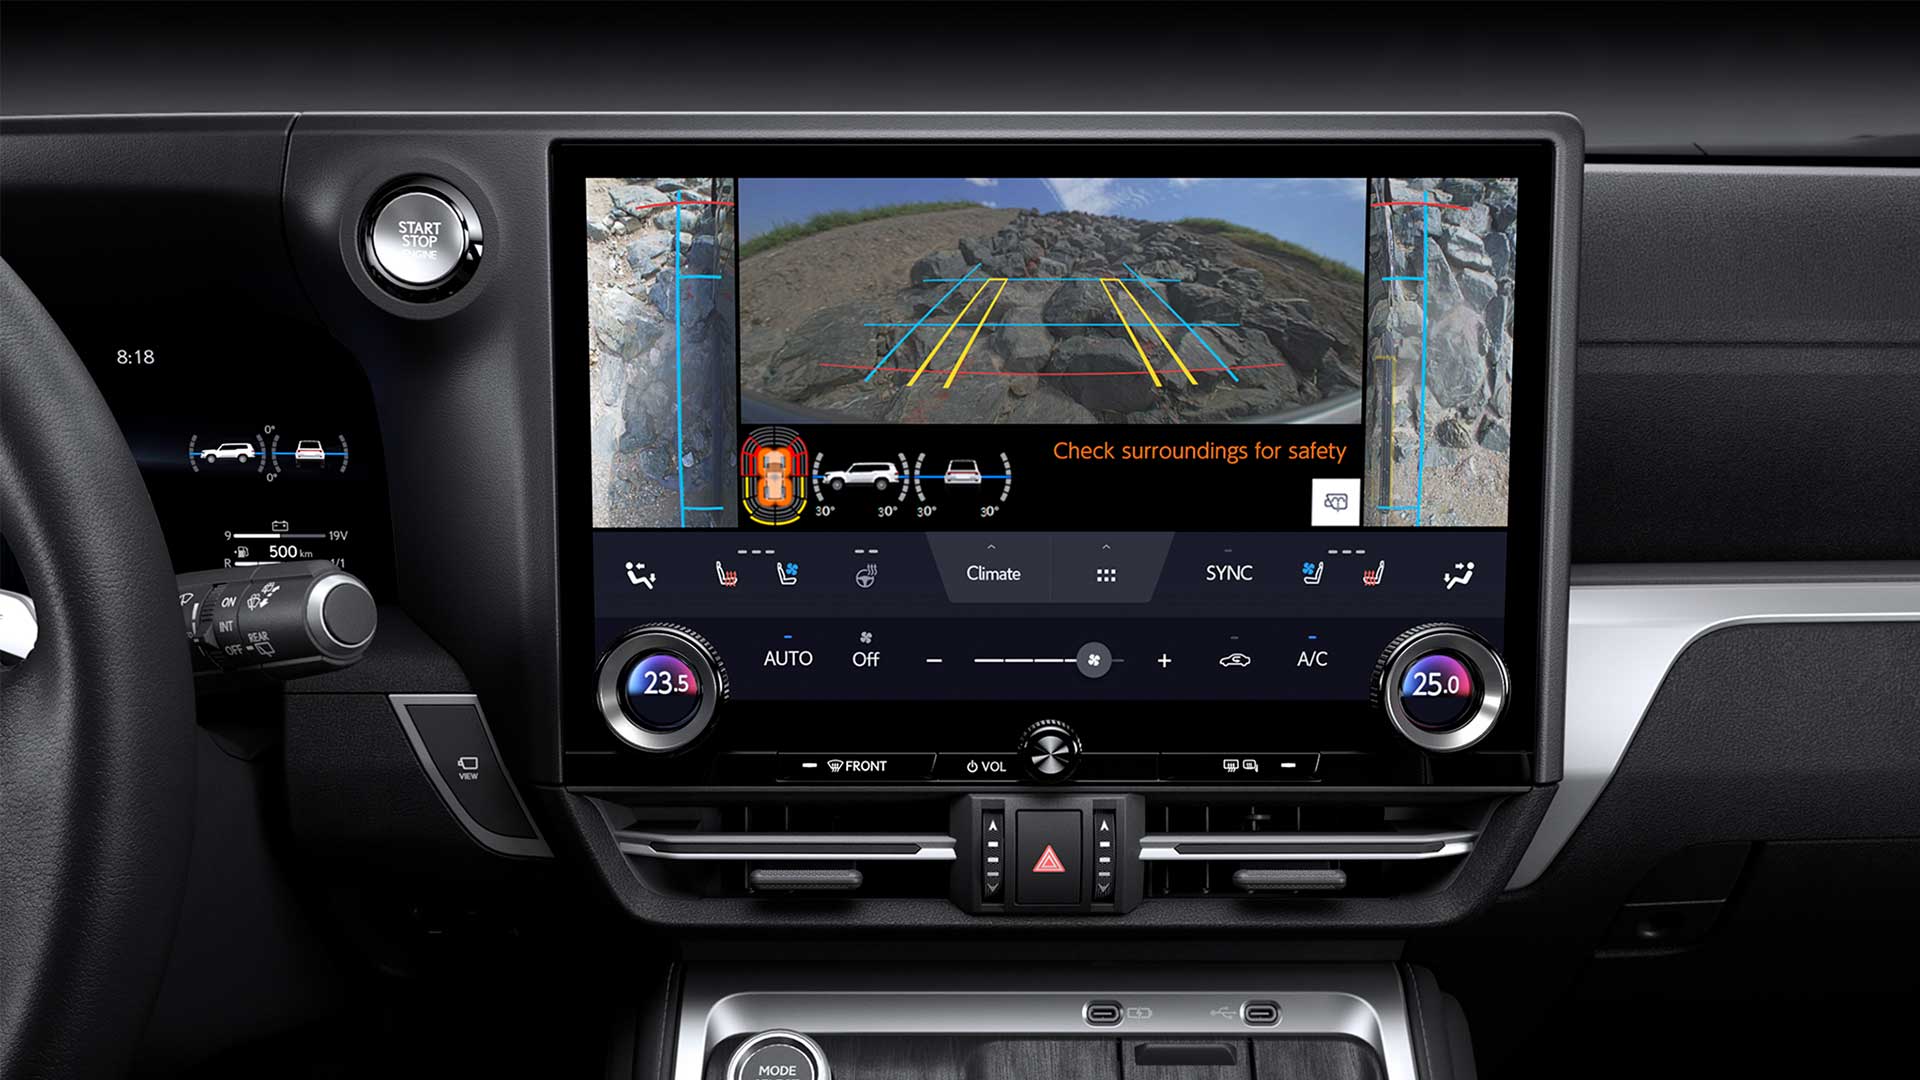 Multimedia screen of the Lexus GX